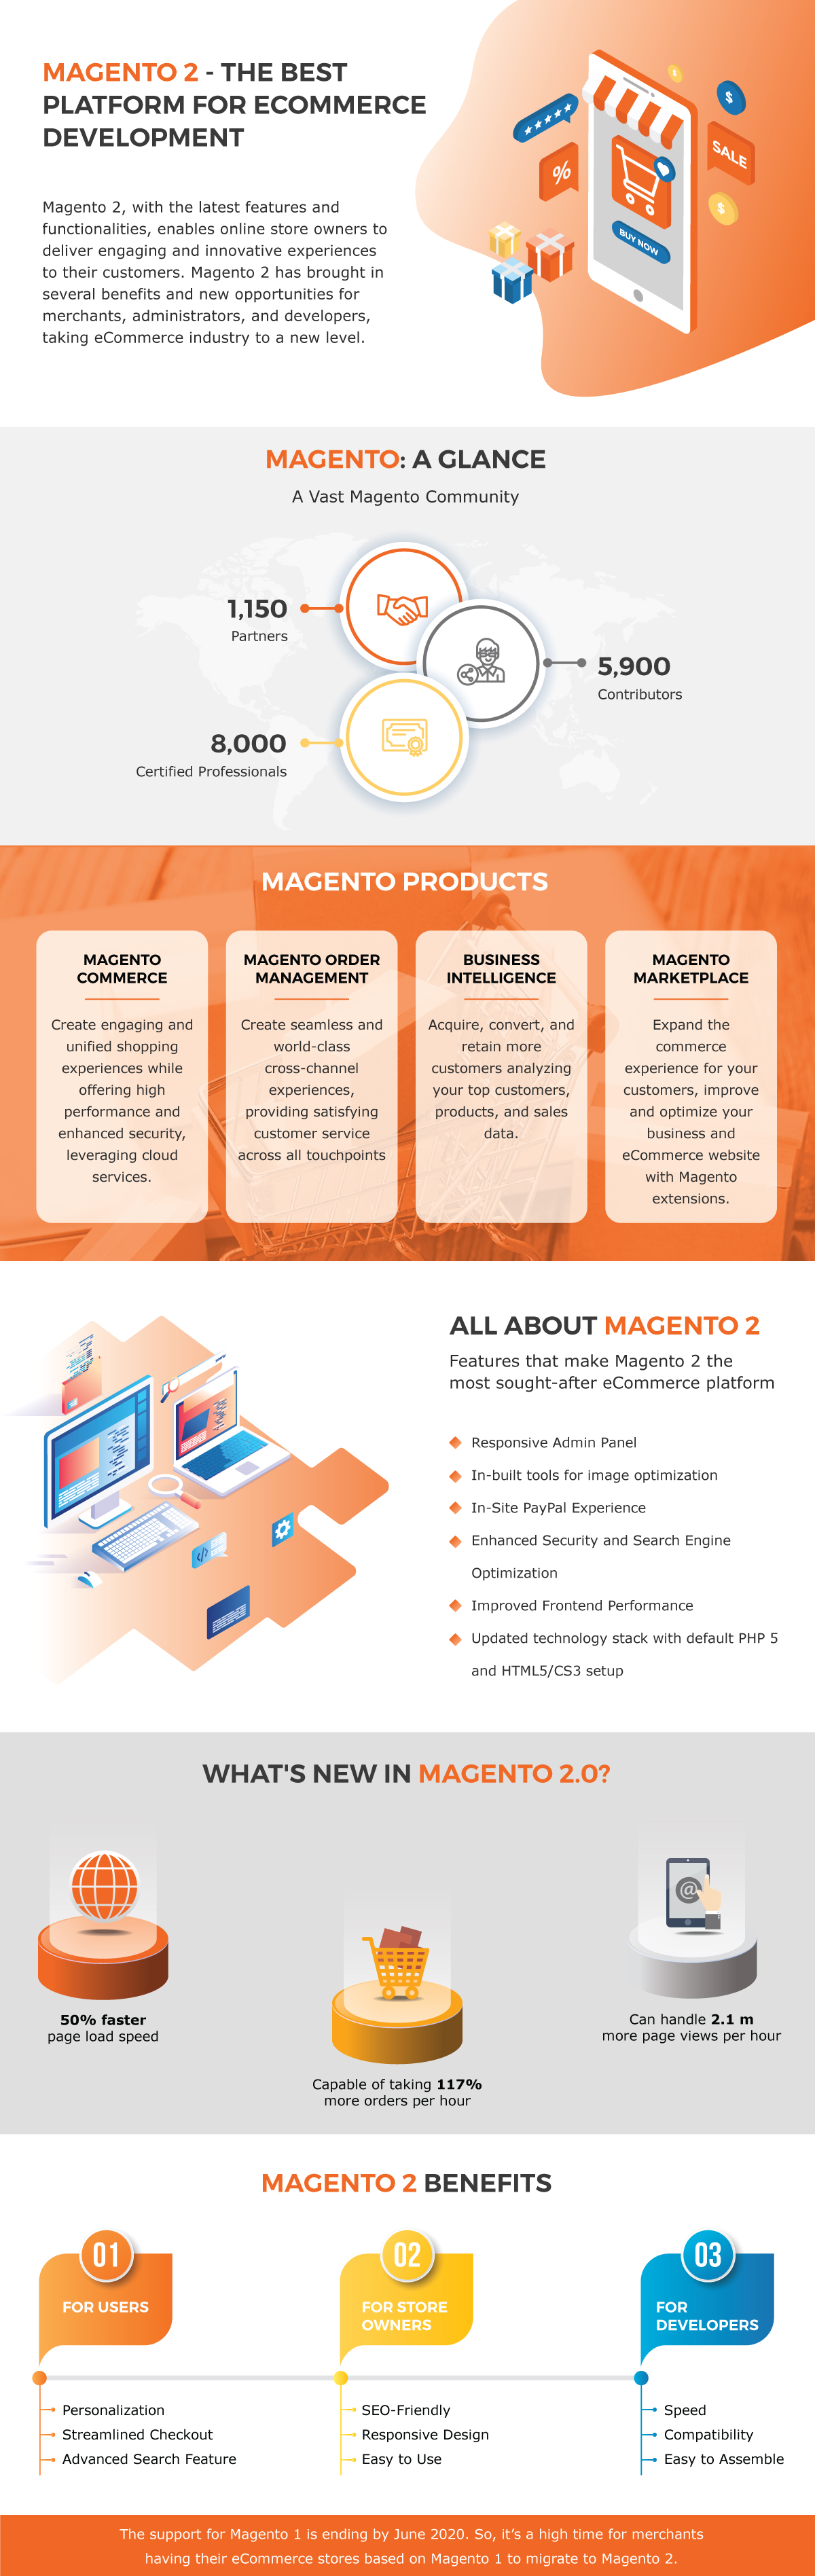 Magento2 #1 Platform for eCommerce Development